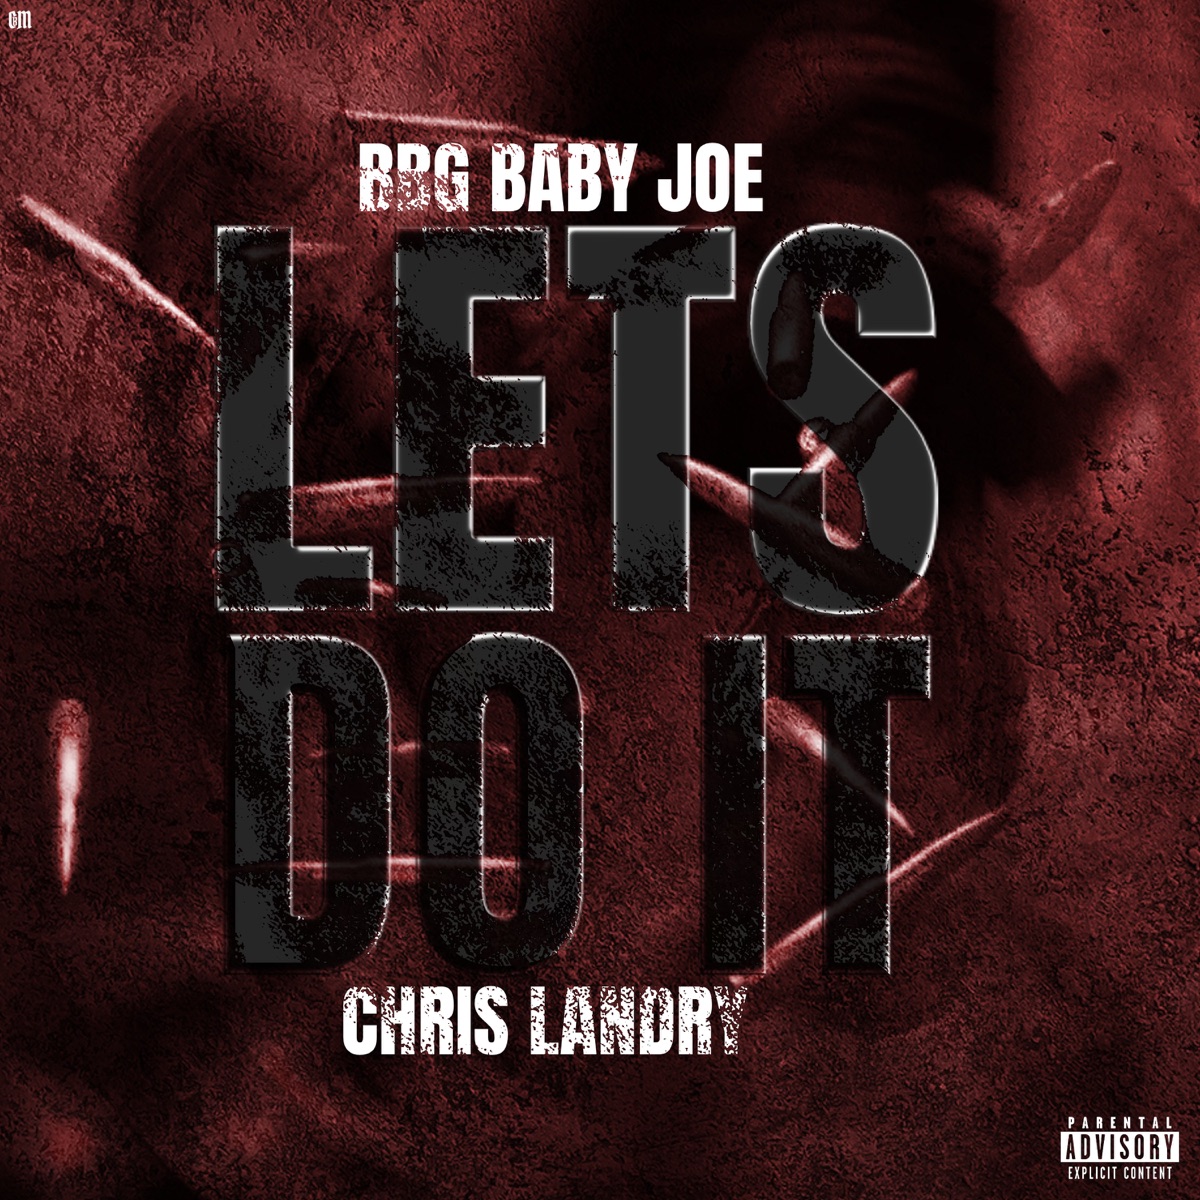 MP3: BBG Baby Joe Ft. Chris Landry – Let’s Do It